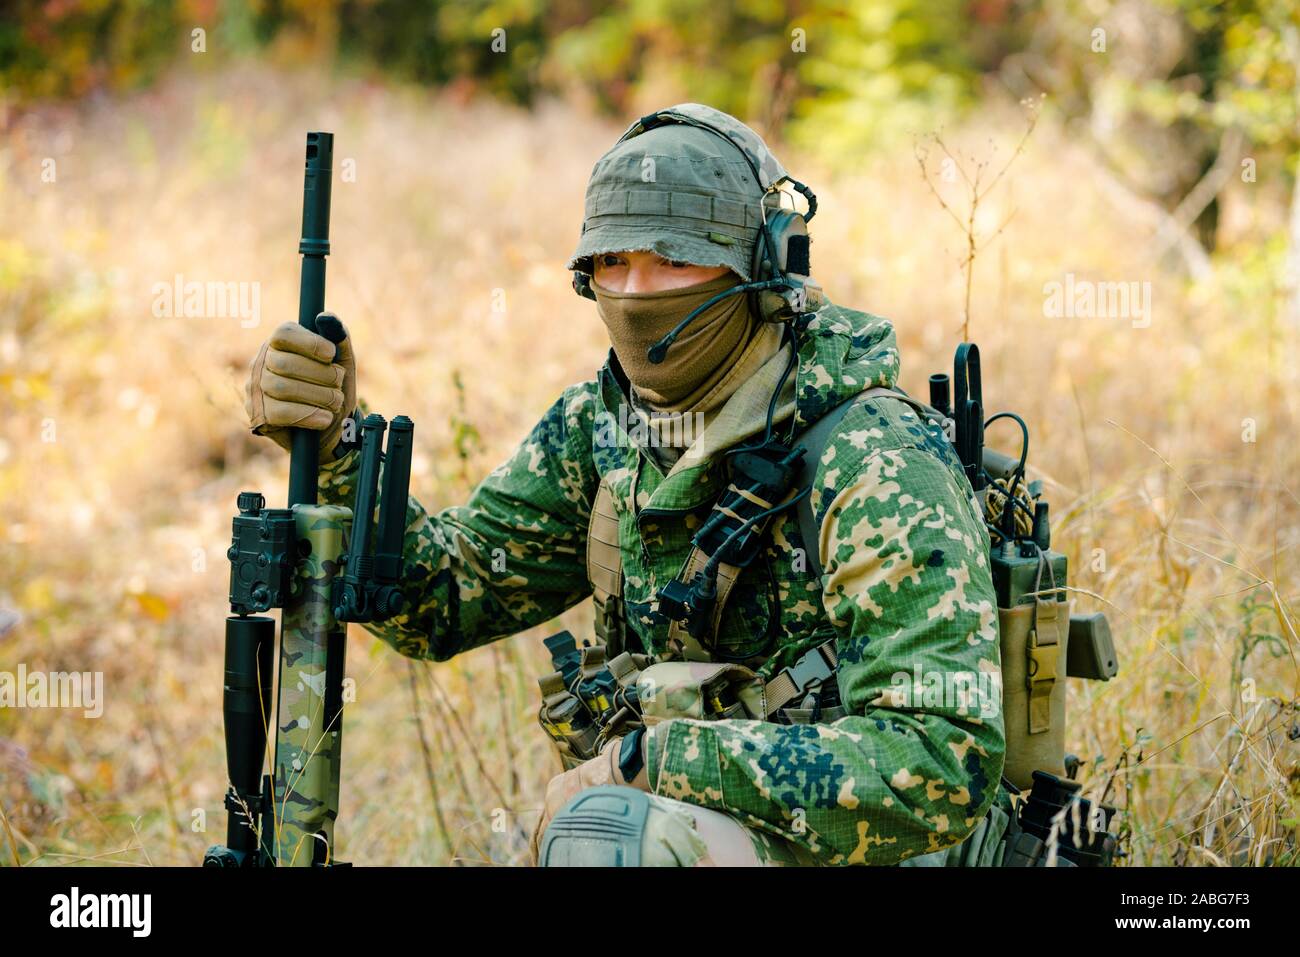 Airsoft hombre uniformado mantenga un rifle de francotirador en